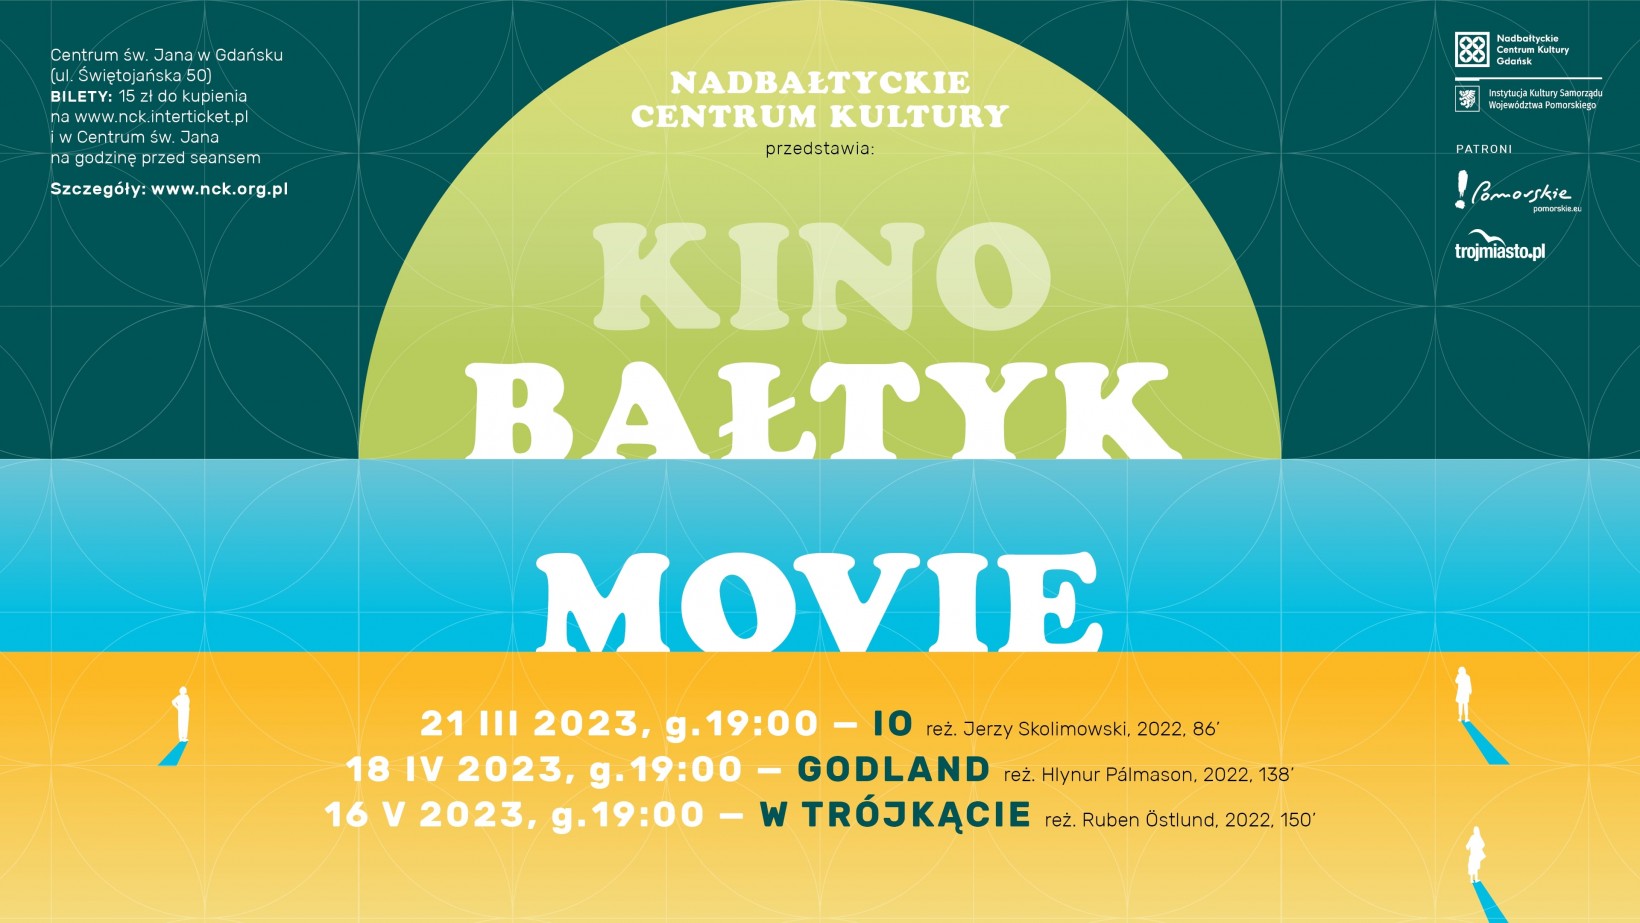 Kino Bałtyk Movie